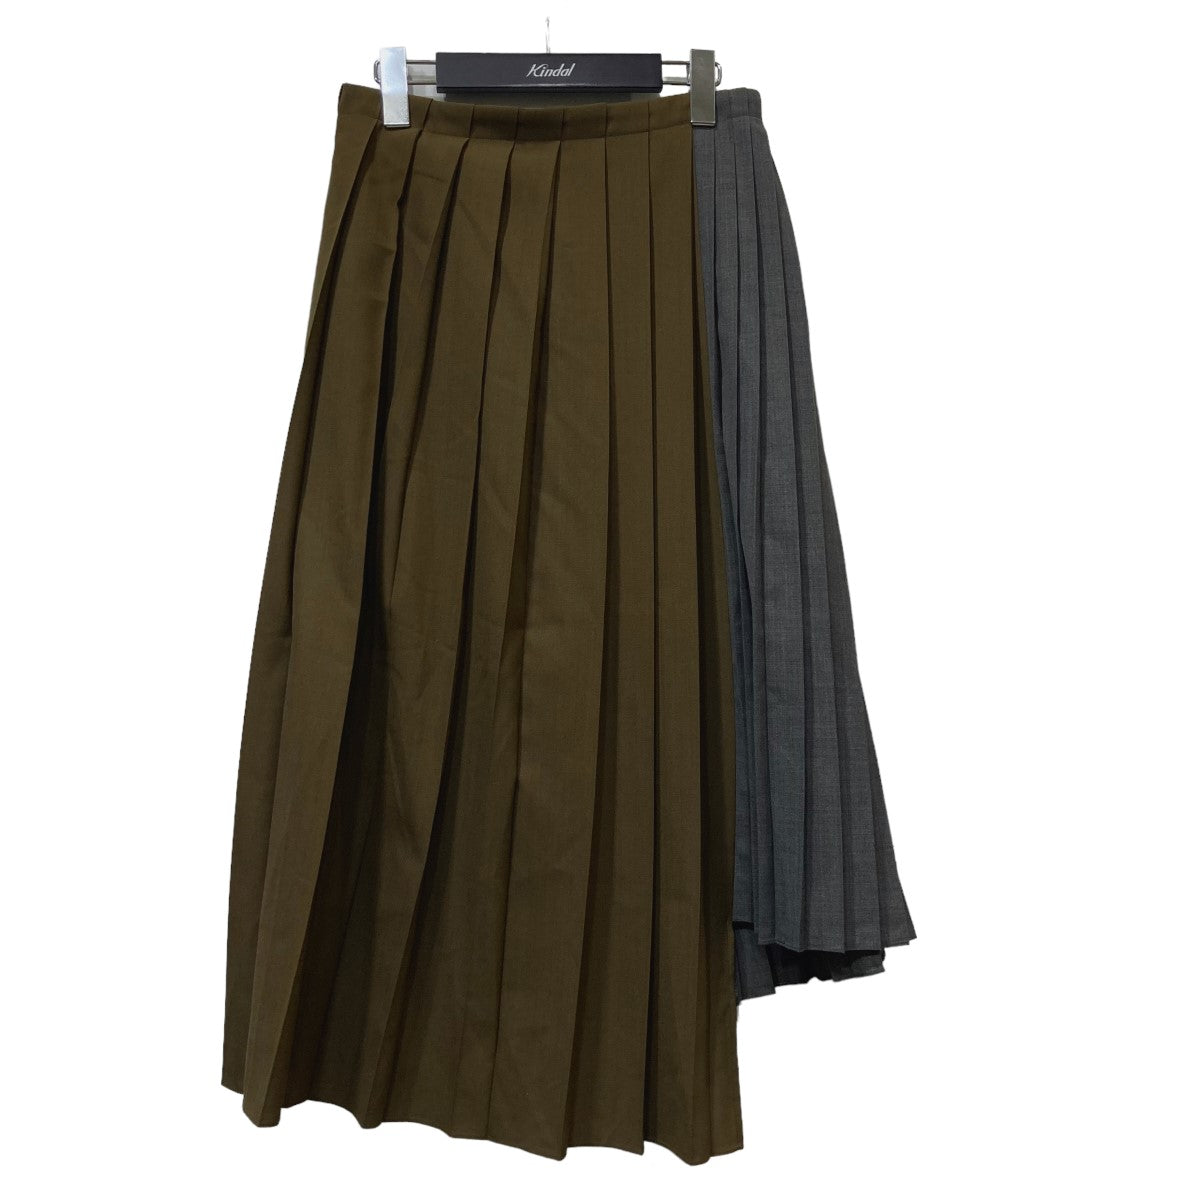 sacai(サカイ) 22AW「Suiting Skirt」切替プリーツスカート オリーブ 